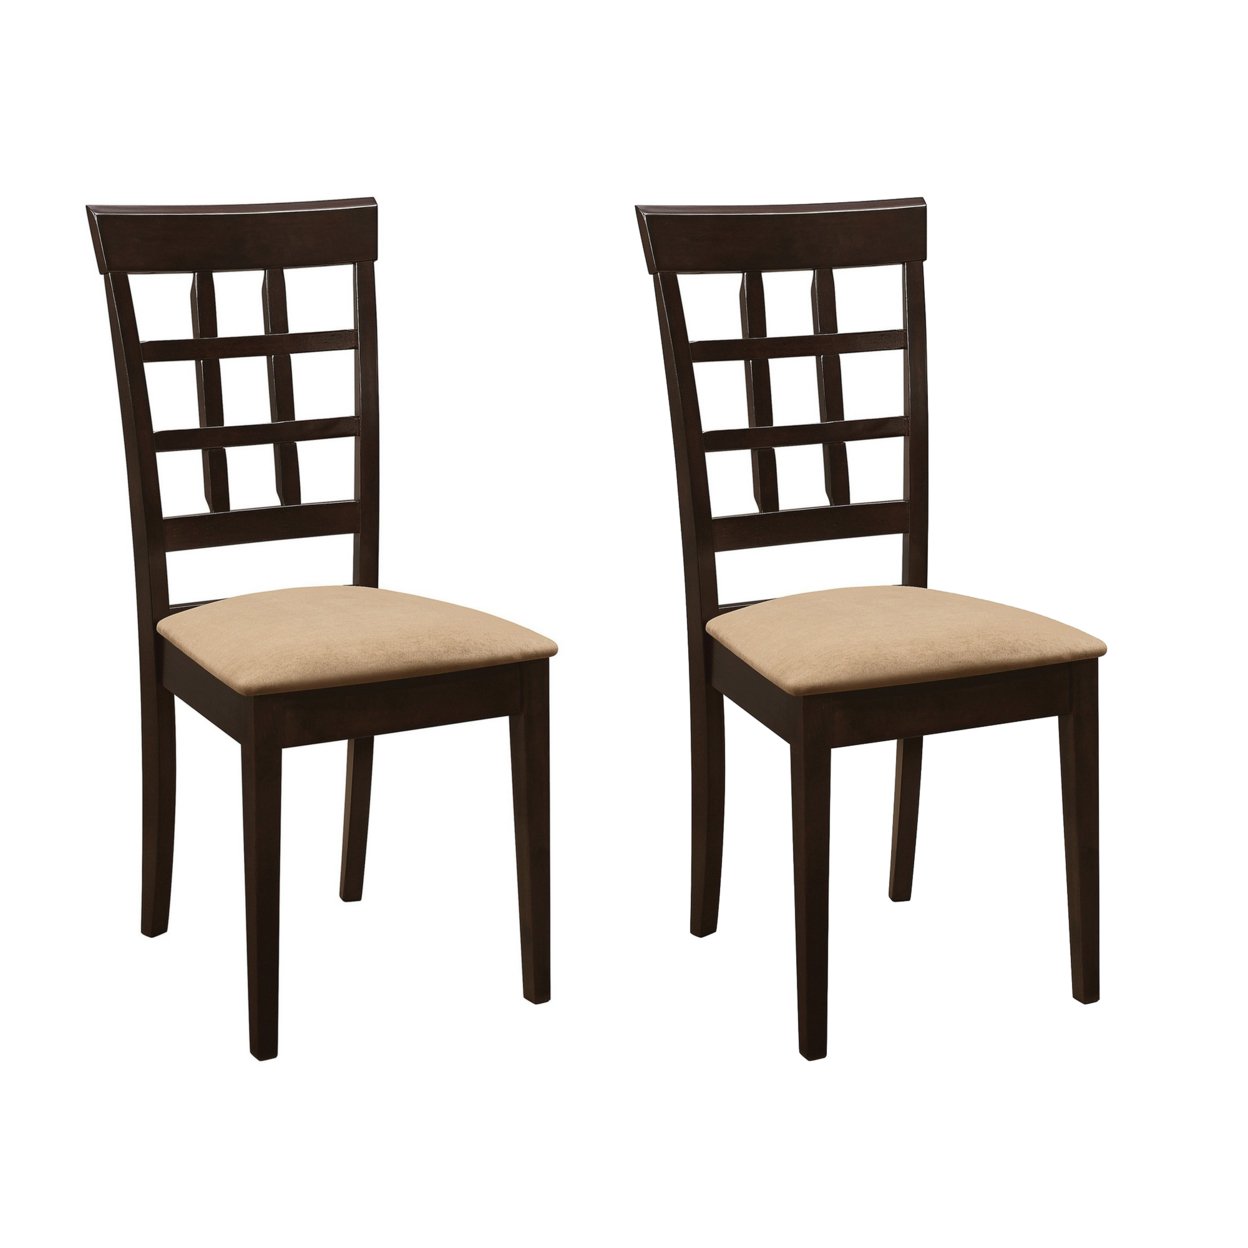 17 Inch Side Dining Chair, Set Of 2, Lattice Back Brown Wood, Tan Fabric- Saltoro Sherpi